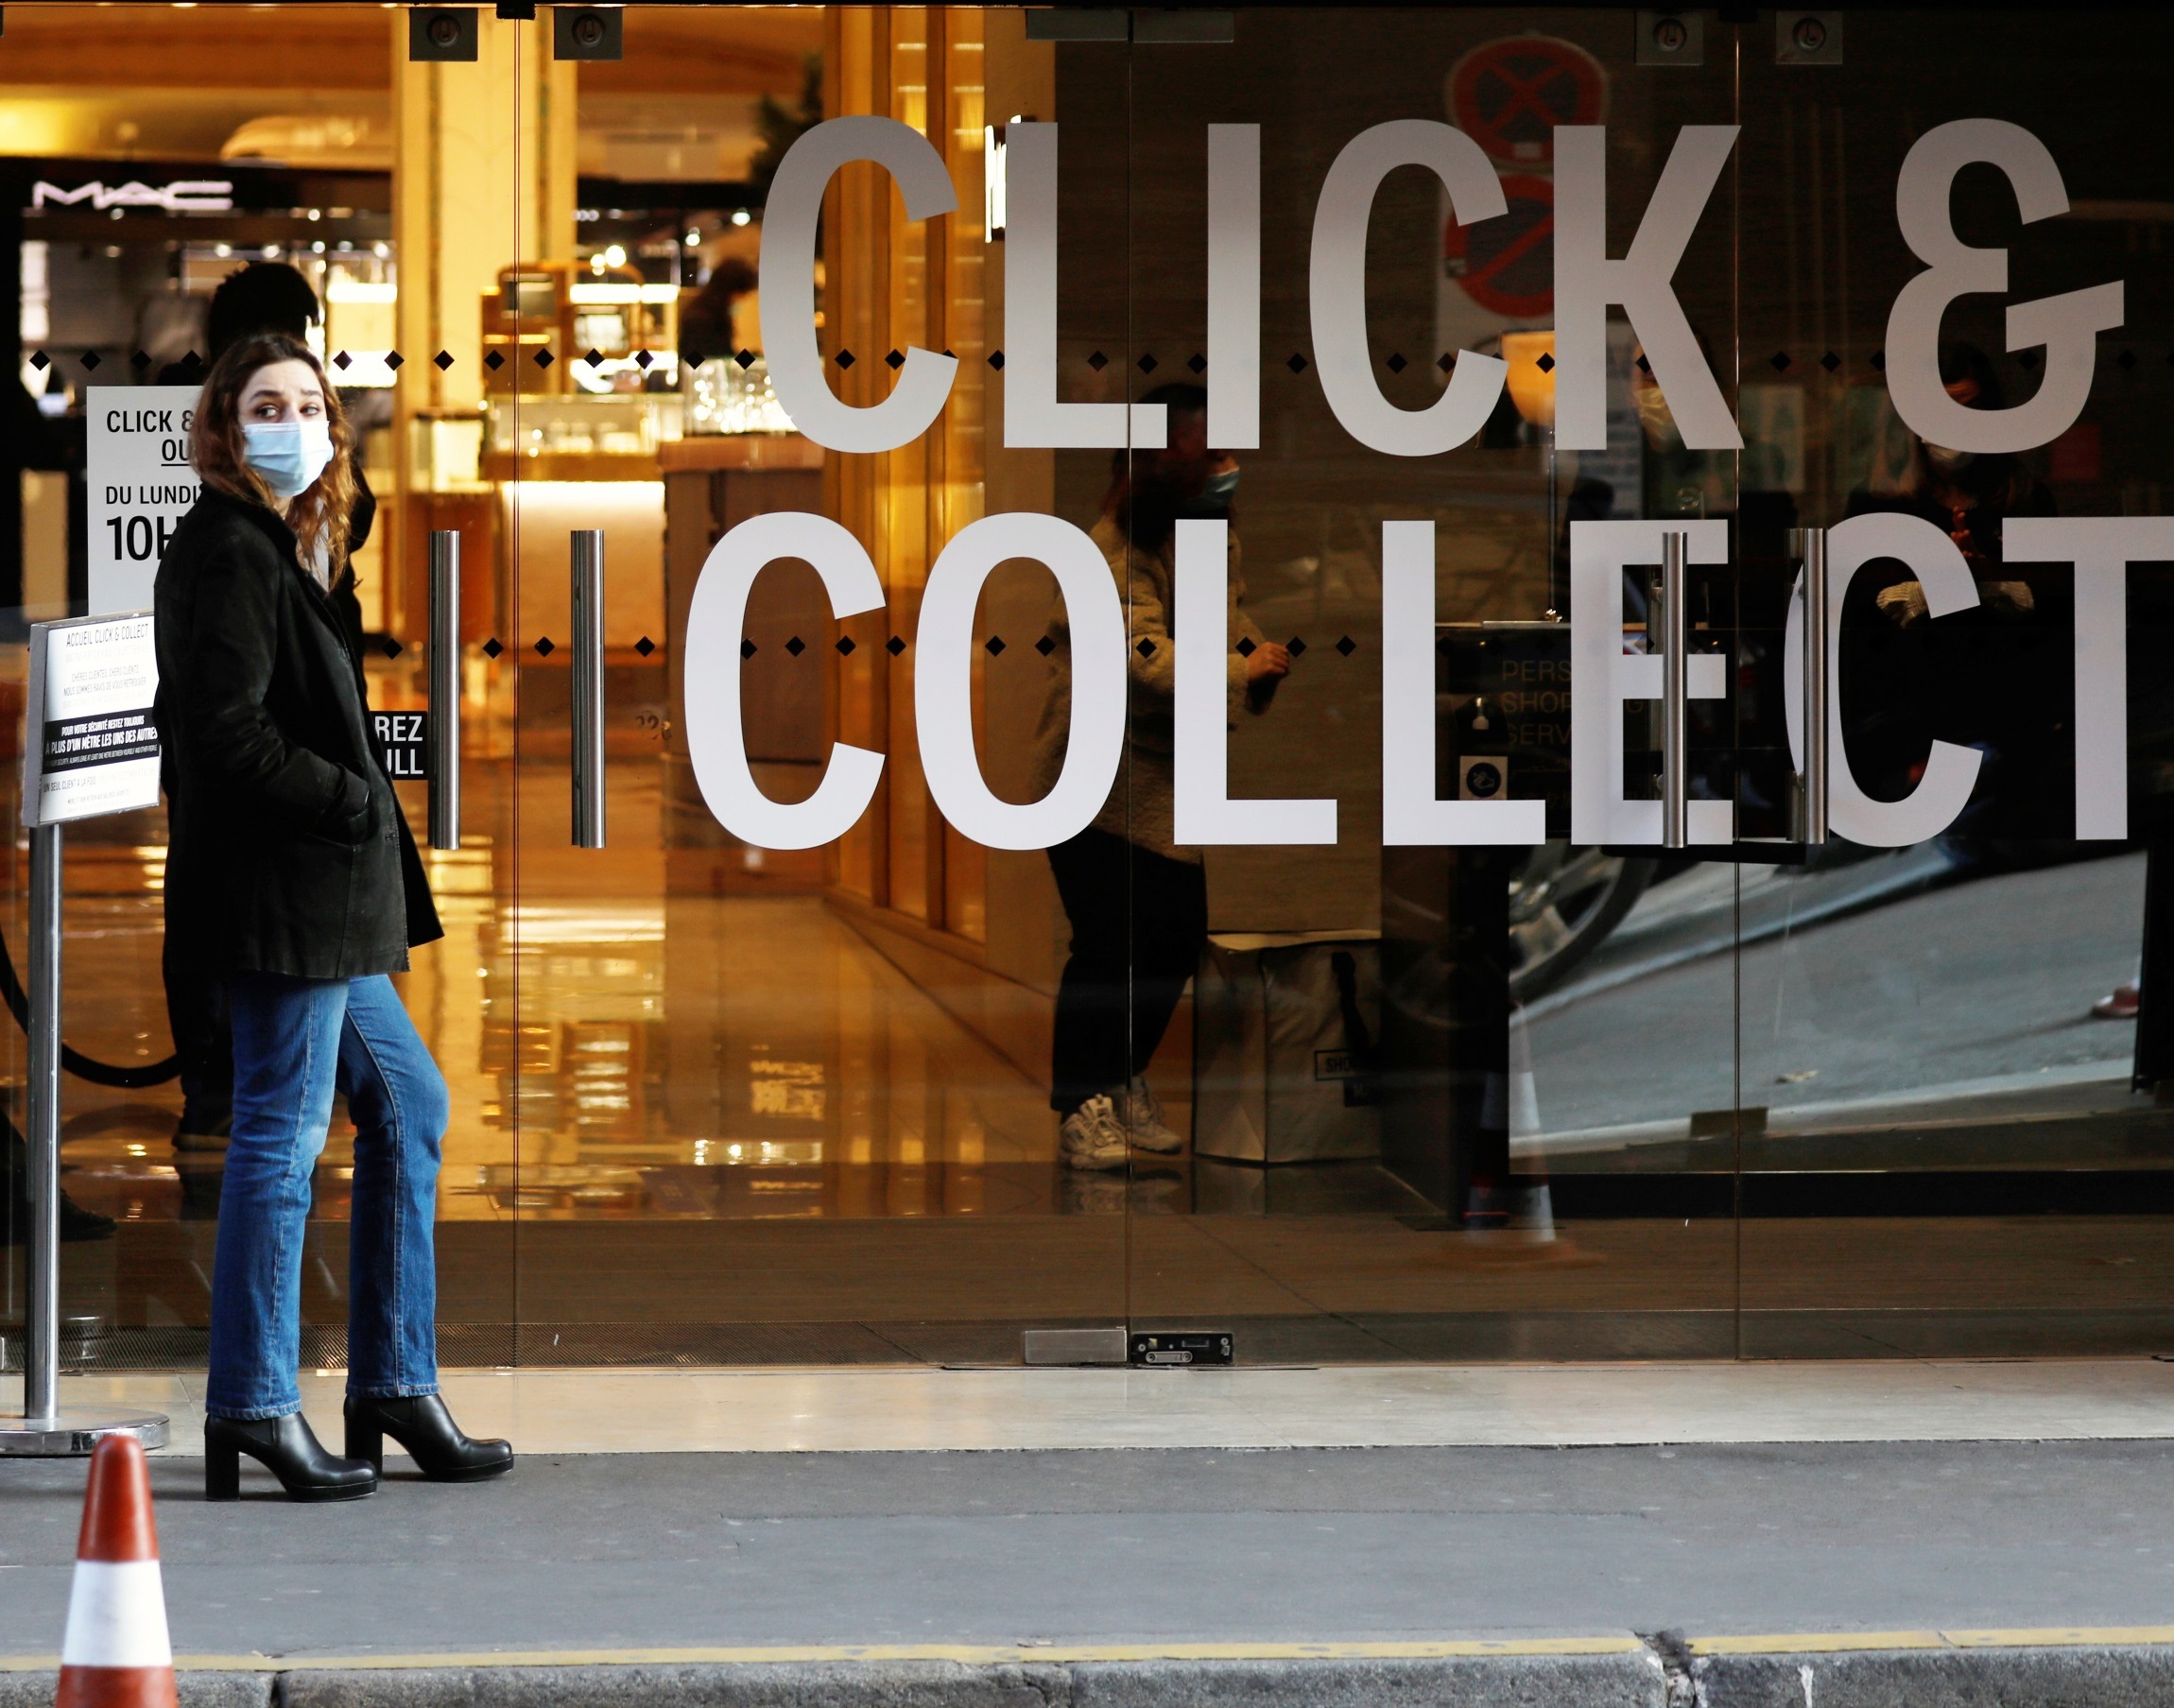 Click & Collect: Έρχεται στην Ελλάδα η νέα μέθοδος παραλαβής προϊόντων -Ποια είναι τα πλεονεκτήματα